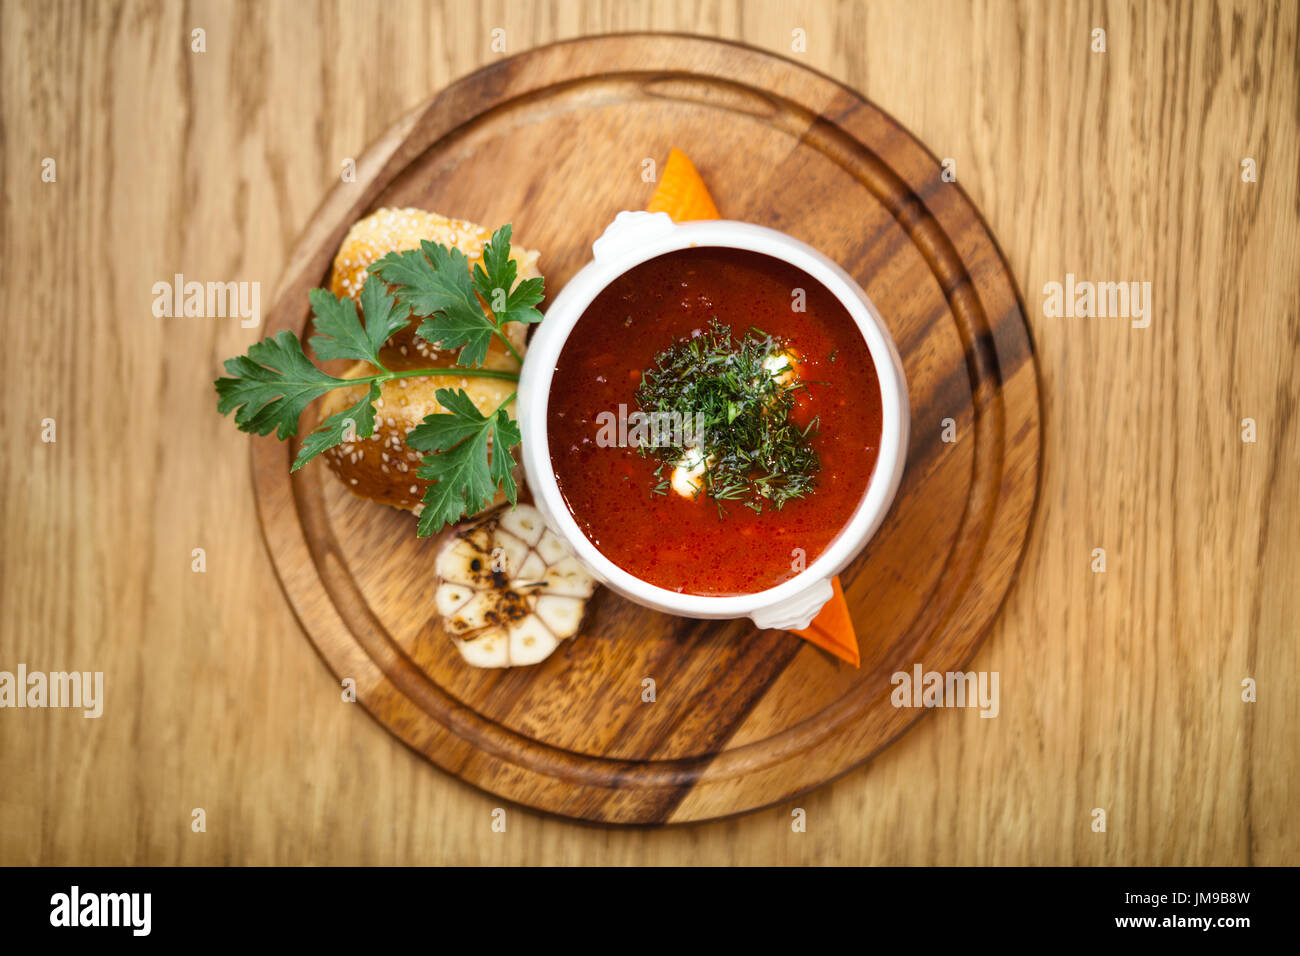 Beet soup borscht Stock Photo